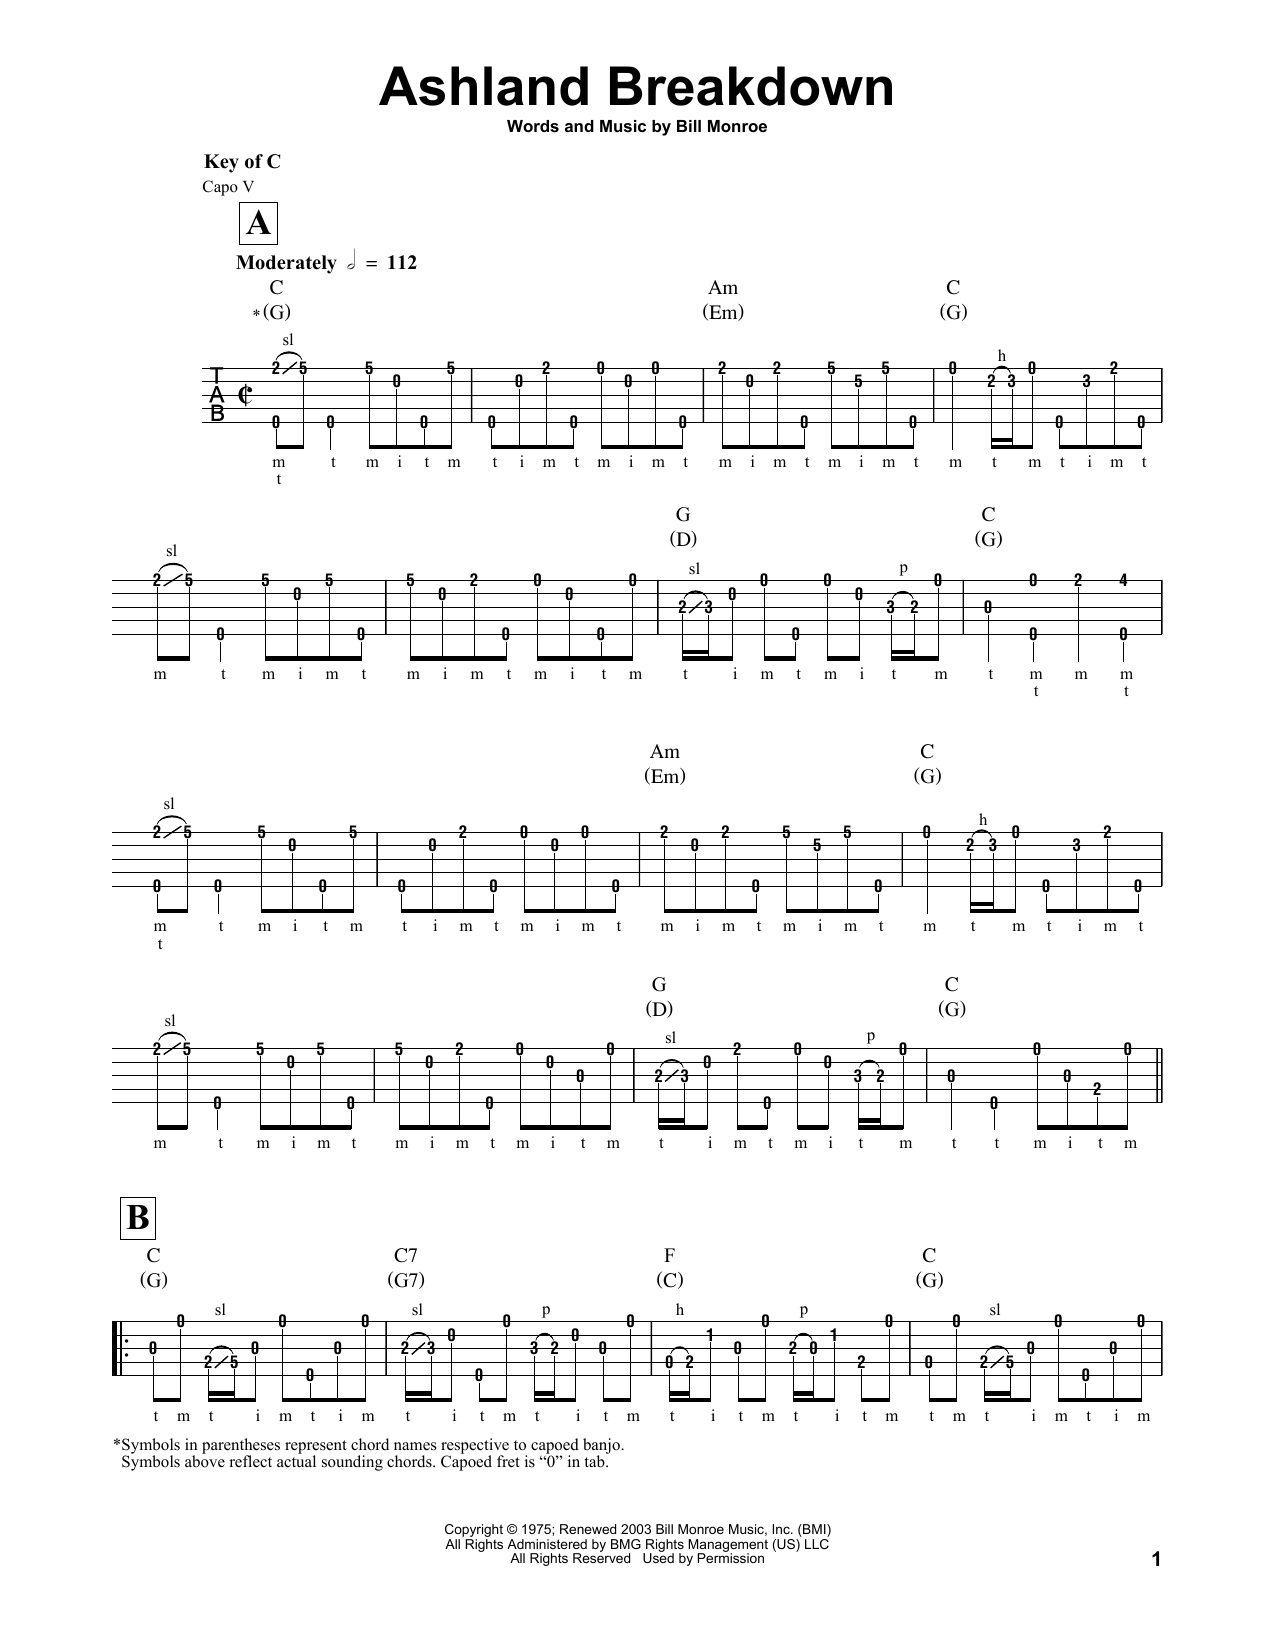 Download Bill Monroe Ashland Breakdown Sheet Music and learn how to play Banjo PDF digital score in minutes